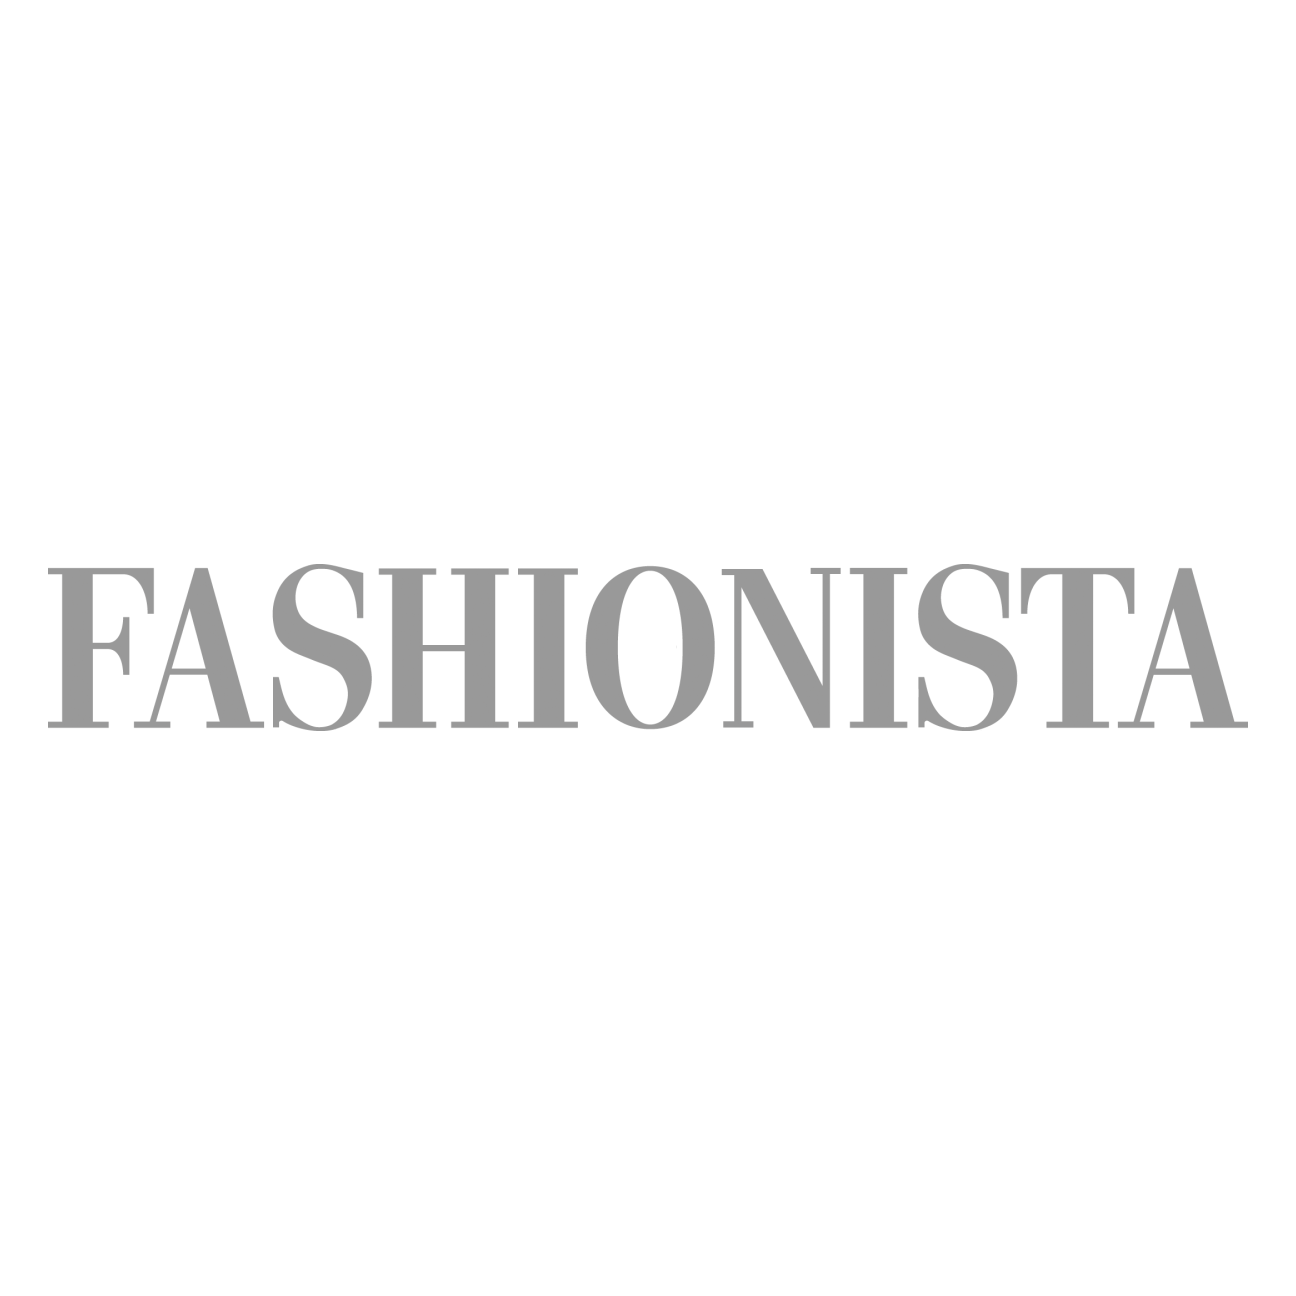 fashionista-logopng.png